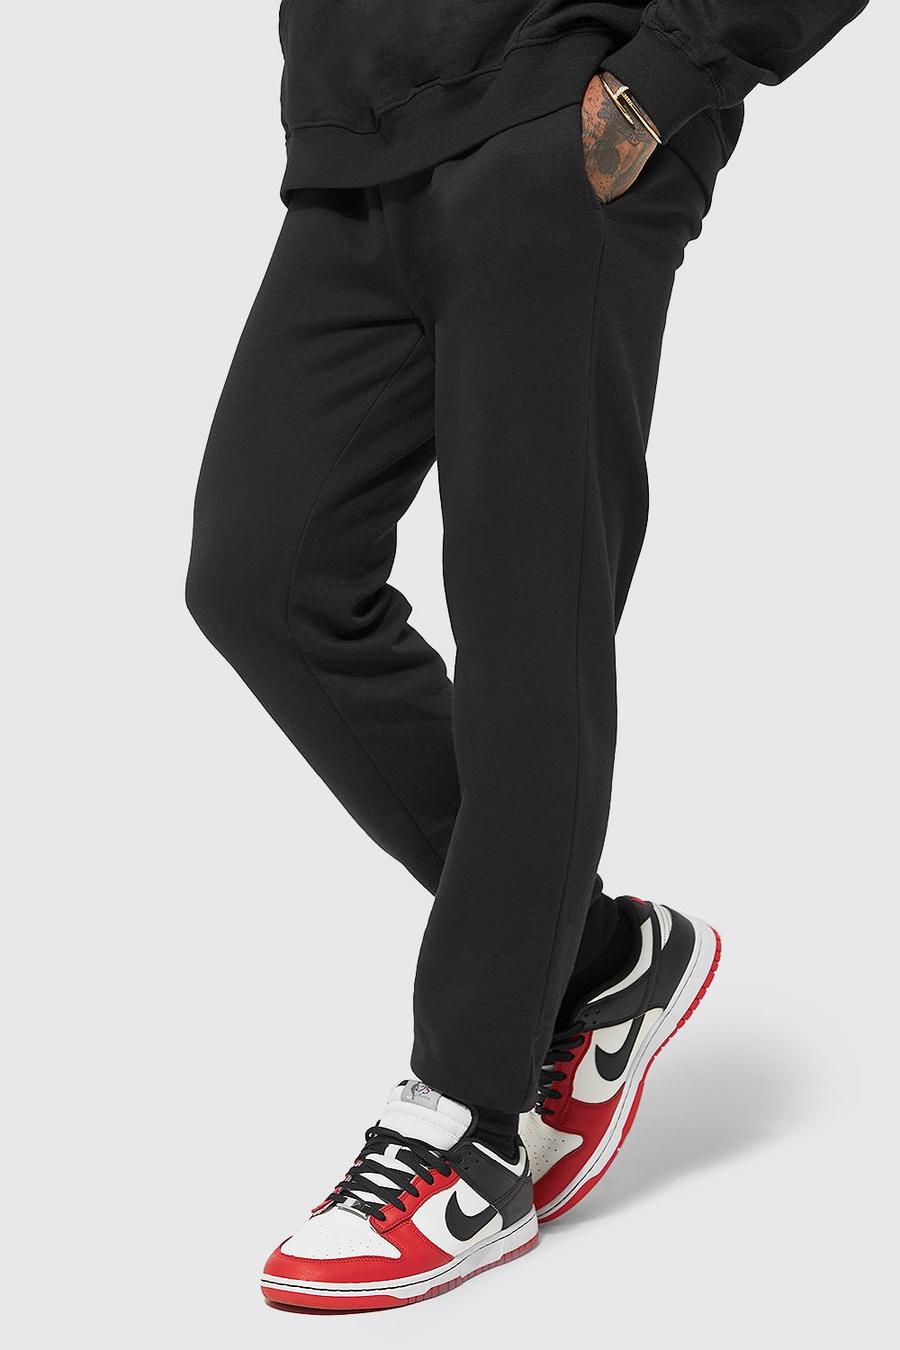 Black negro מכנסי ריצה בגזרה רגילה מבד משולב בכותנת REEL